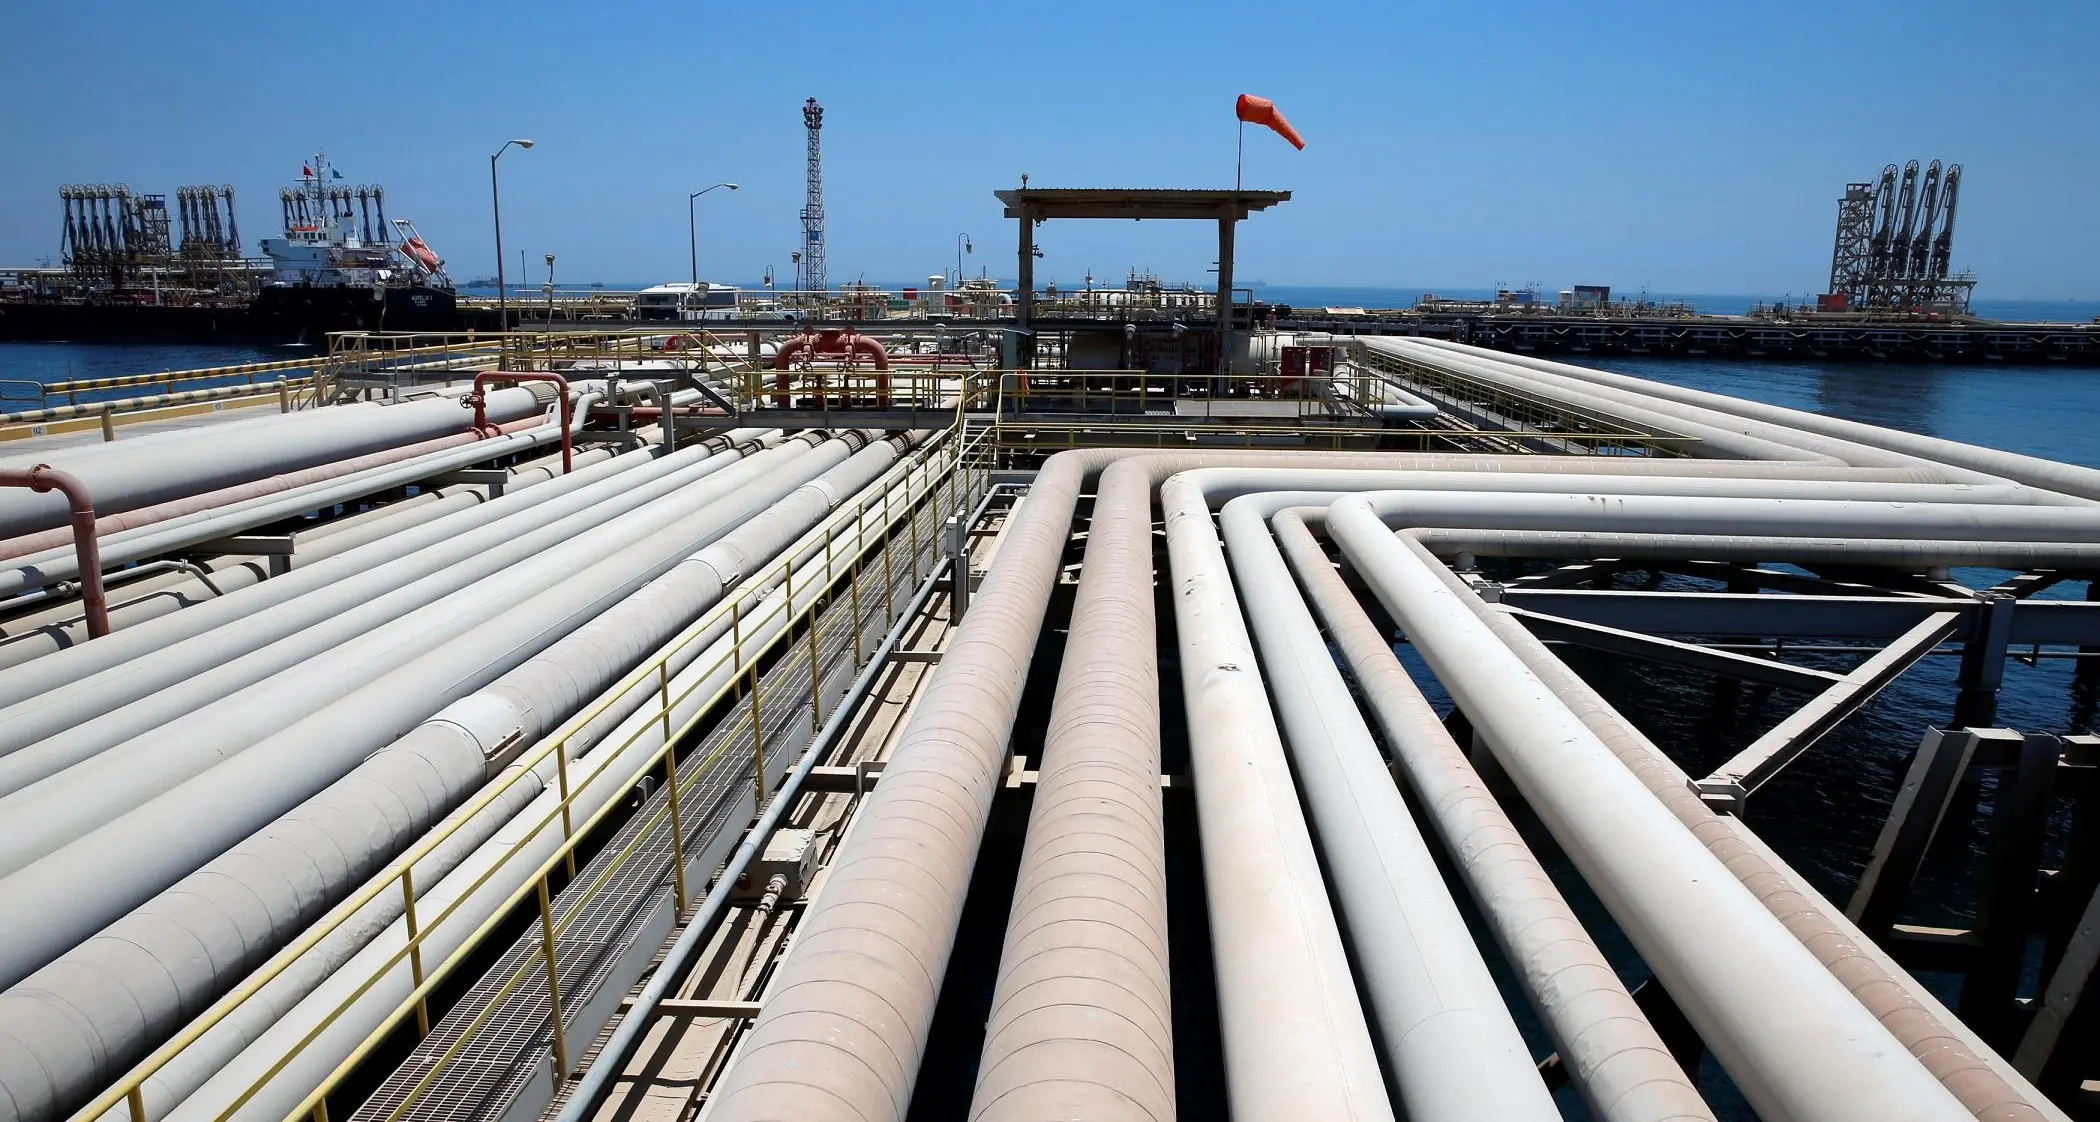 Saudi Arabia's oil exports value jumps 123% in October